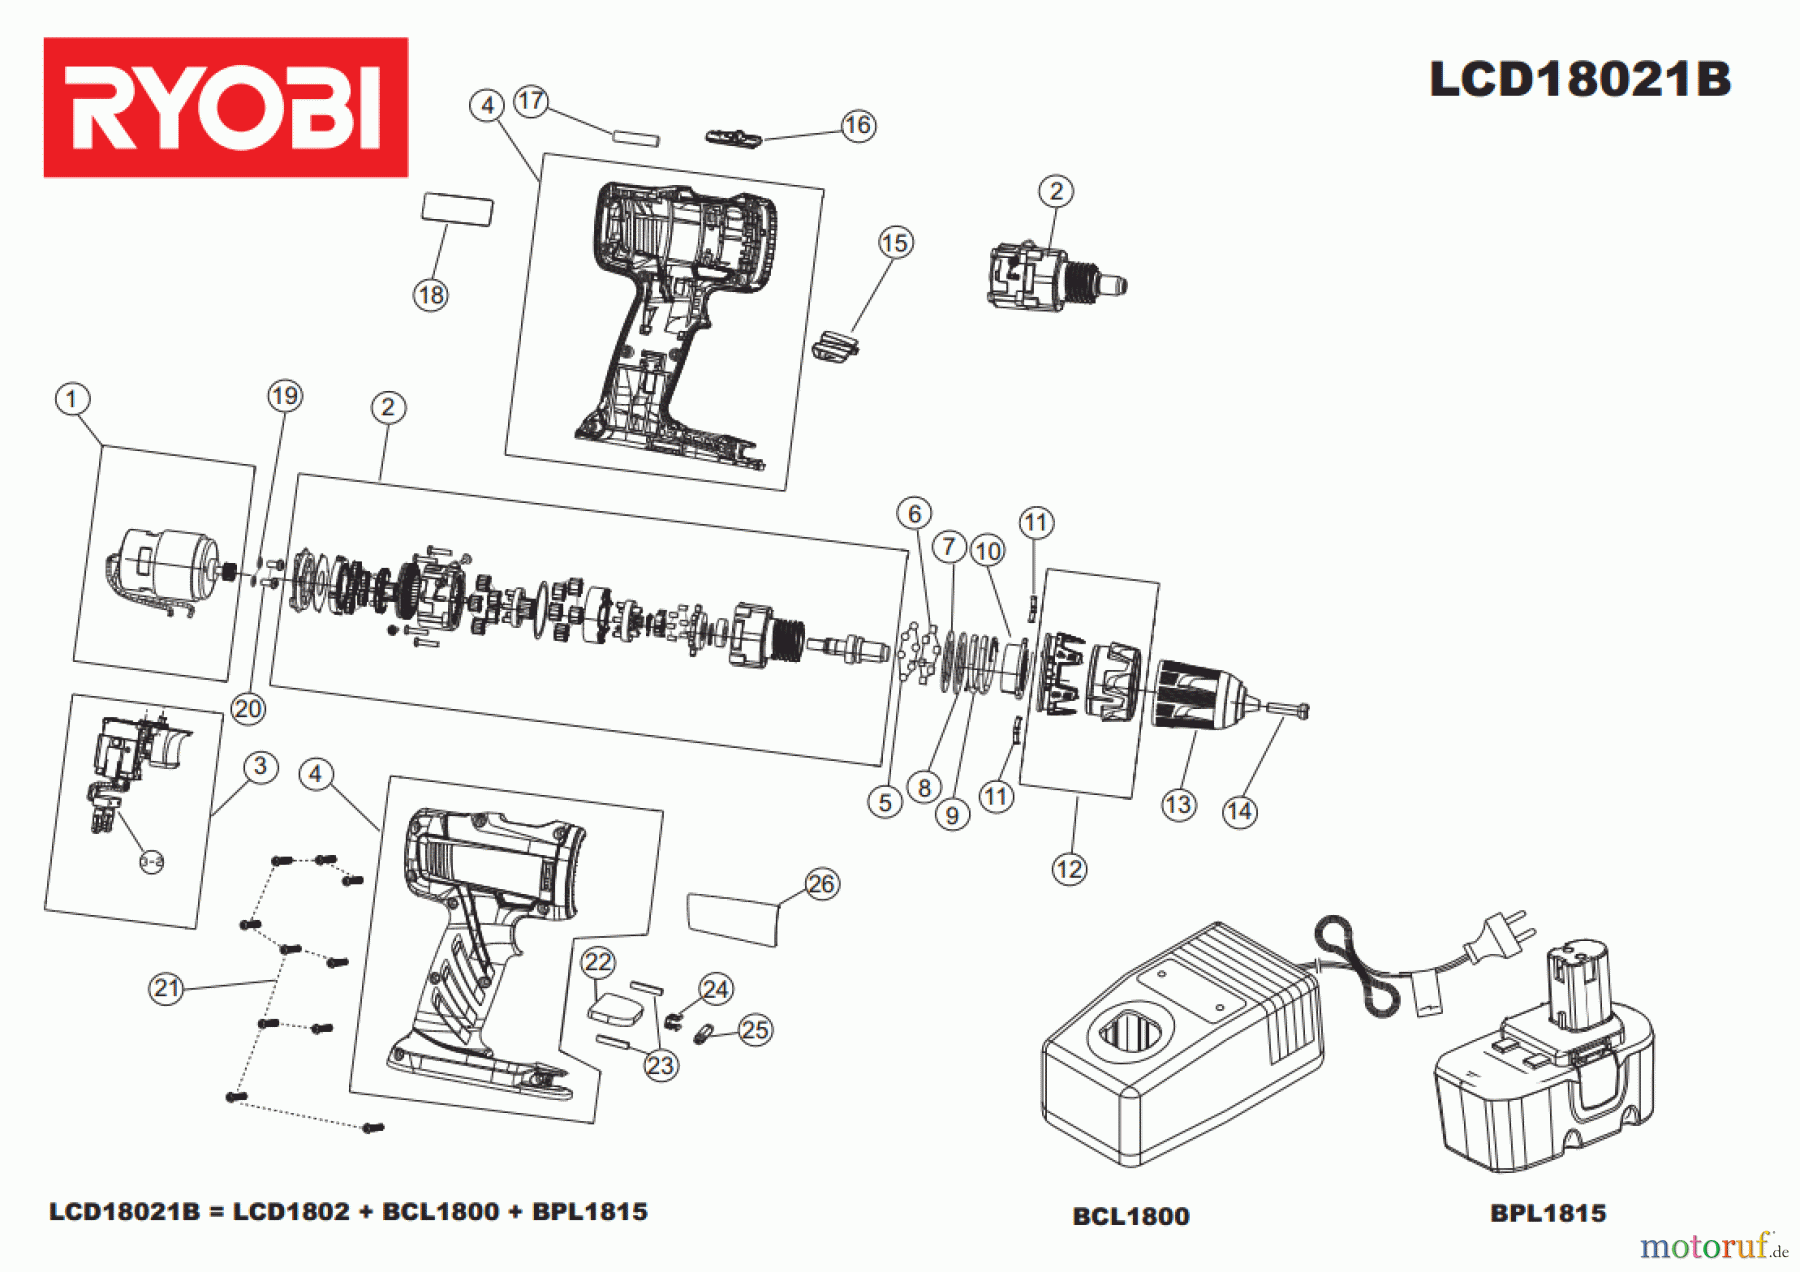  Ryobi (Schlag-)Bohrschrauber Bohrschrauber LCD18021B Seite 1